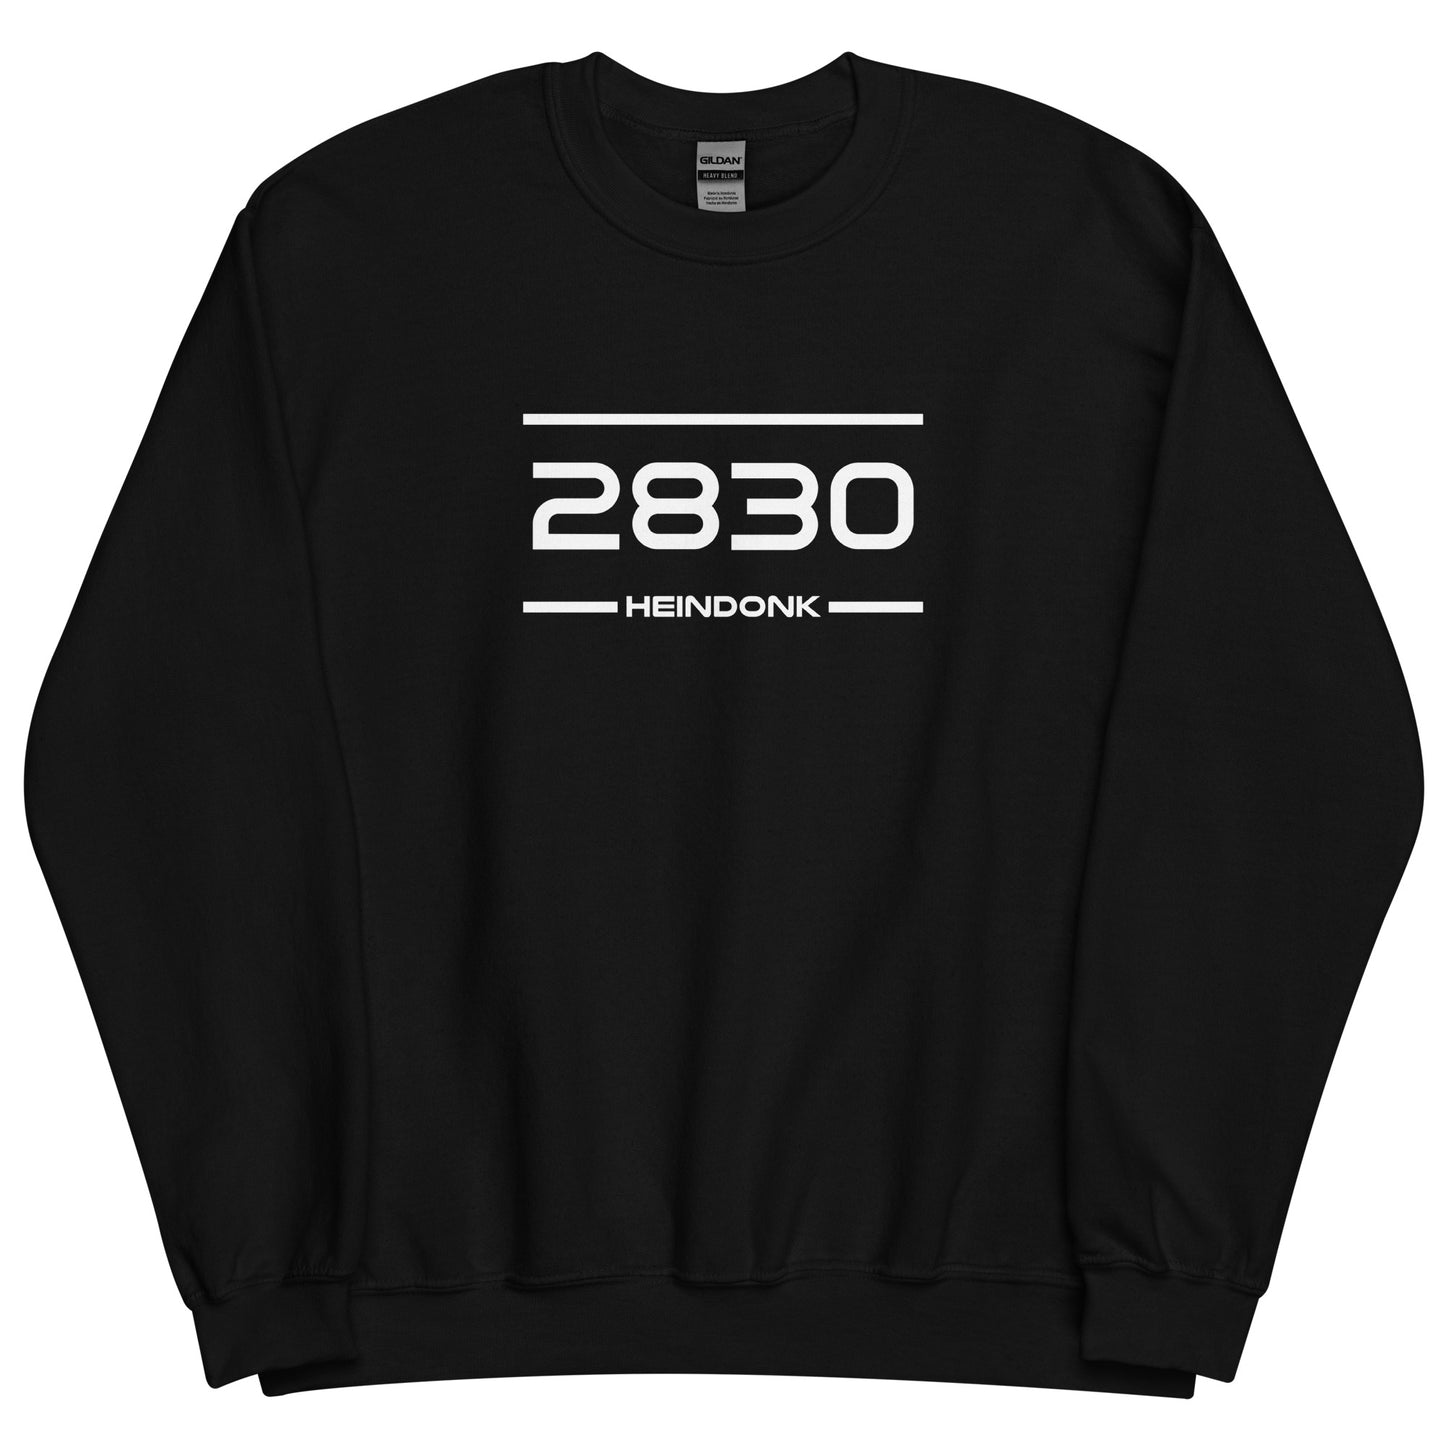 Sweater - 2830 - Heindonk (M/V)